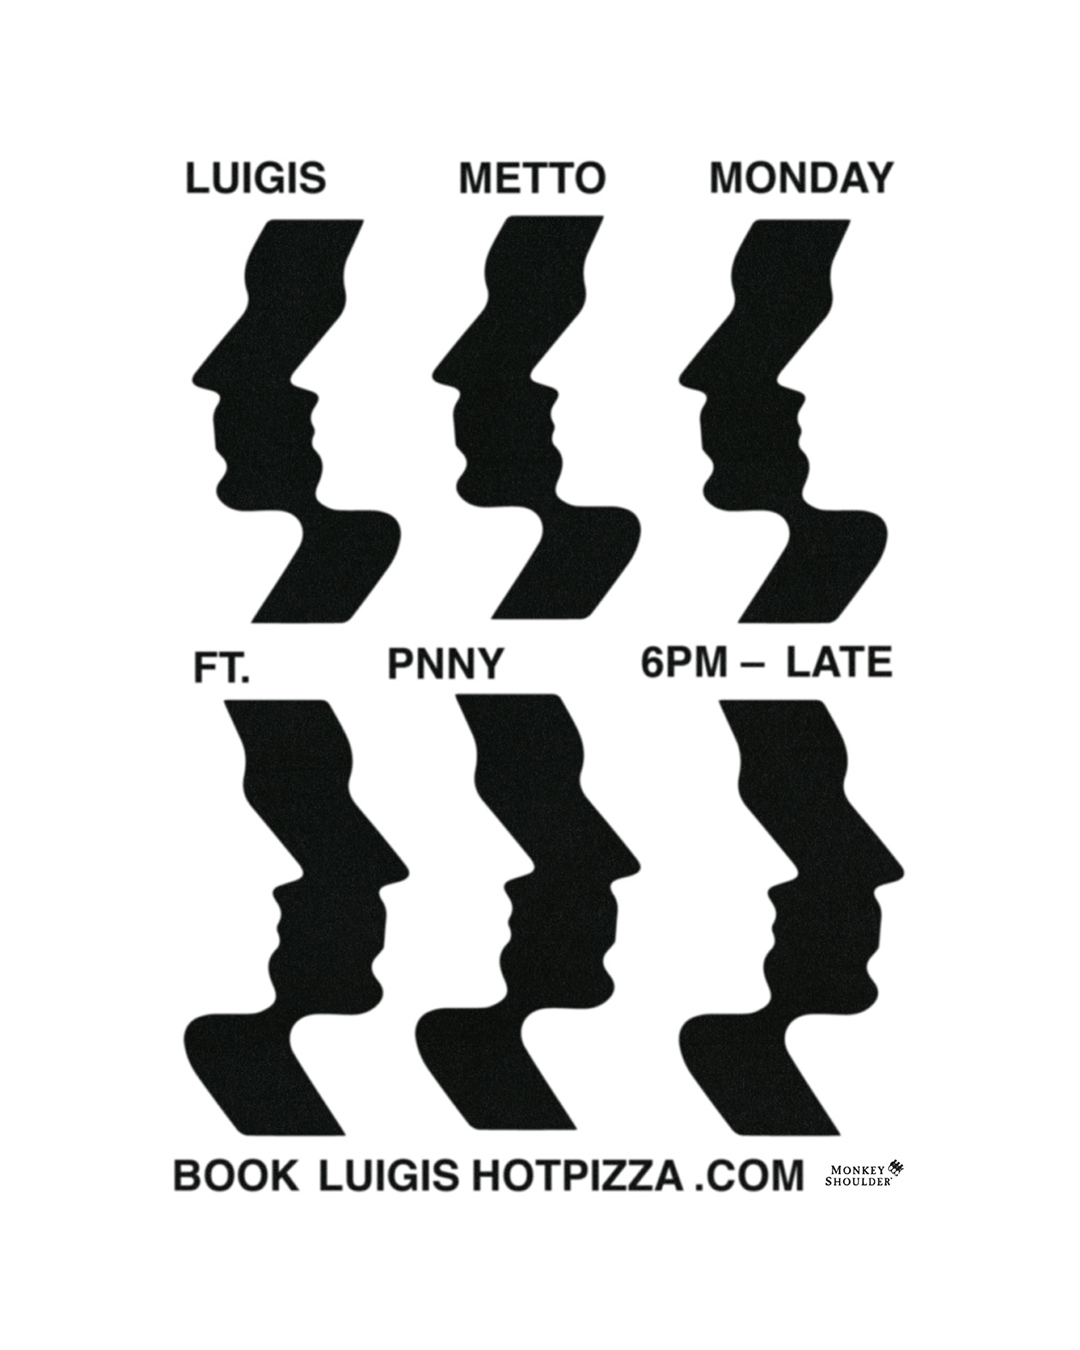 METTO MONDAYS AT LUIGI’S – DECEMBER 12TH thumbnail image